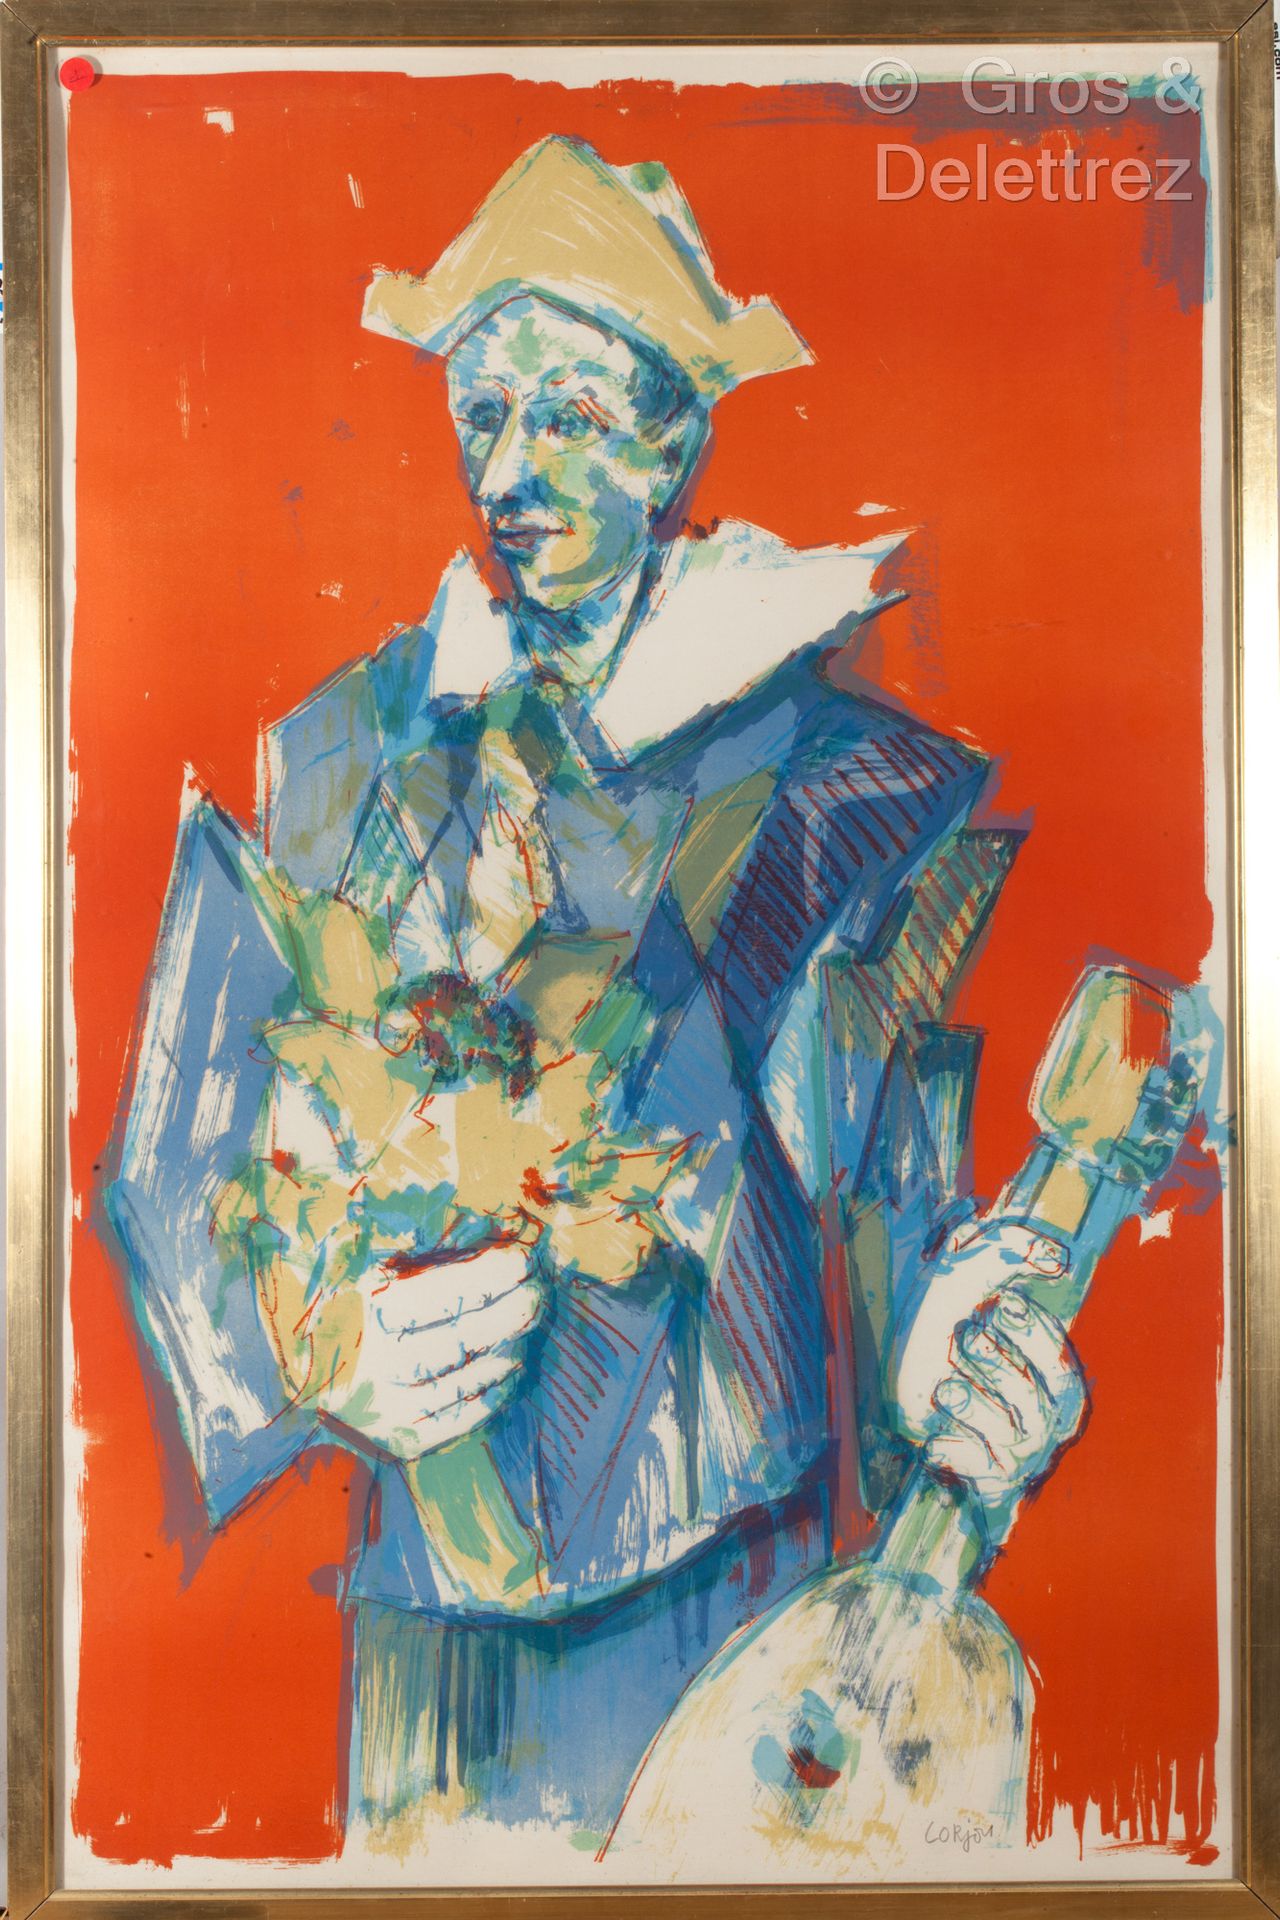 Null (E) 伯纳德-洛尔朱(1908-1986)

小丑与一束花

彩色石版画

右下角的反签名

120 x 65厘米